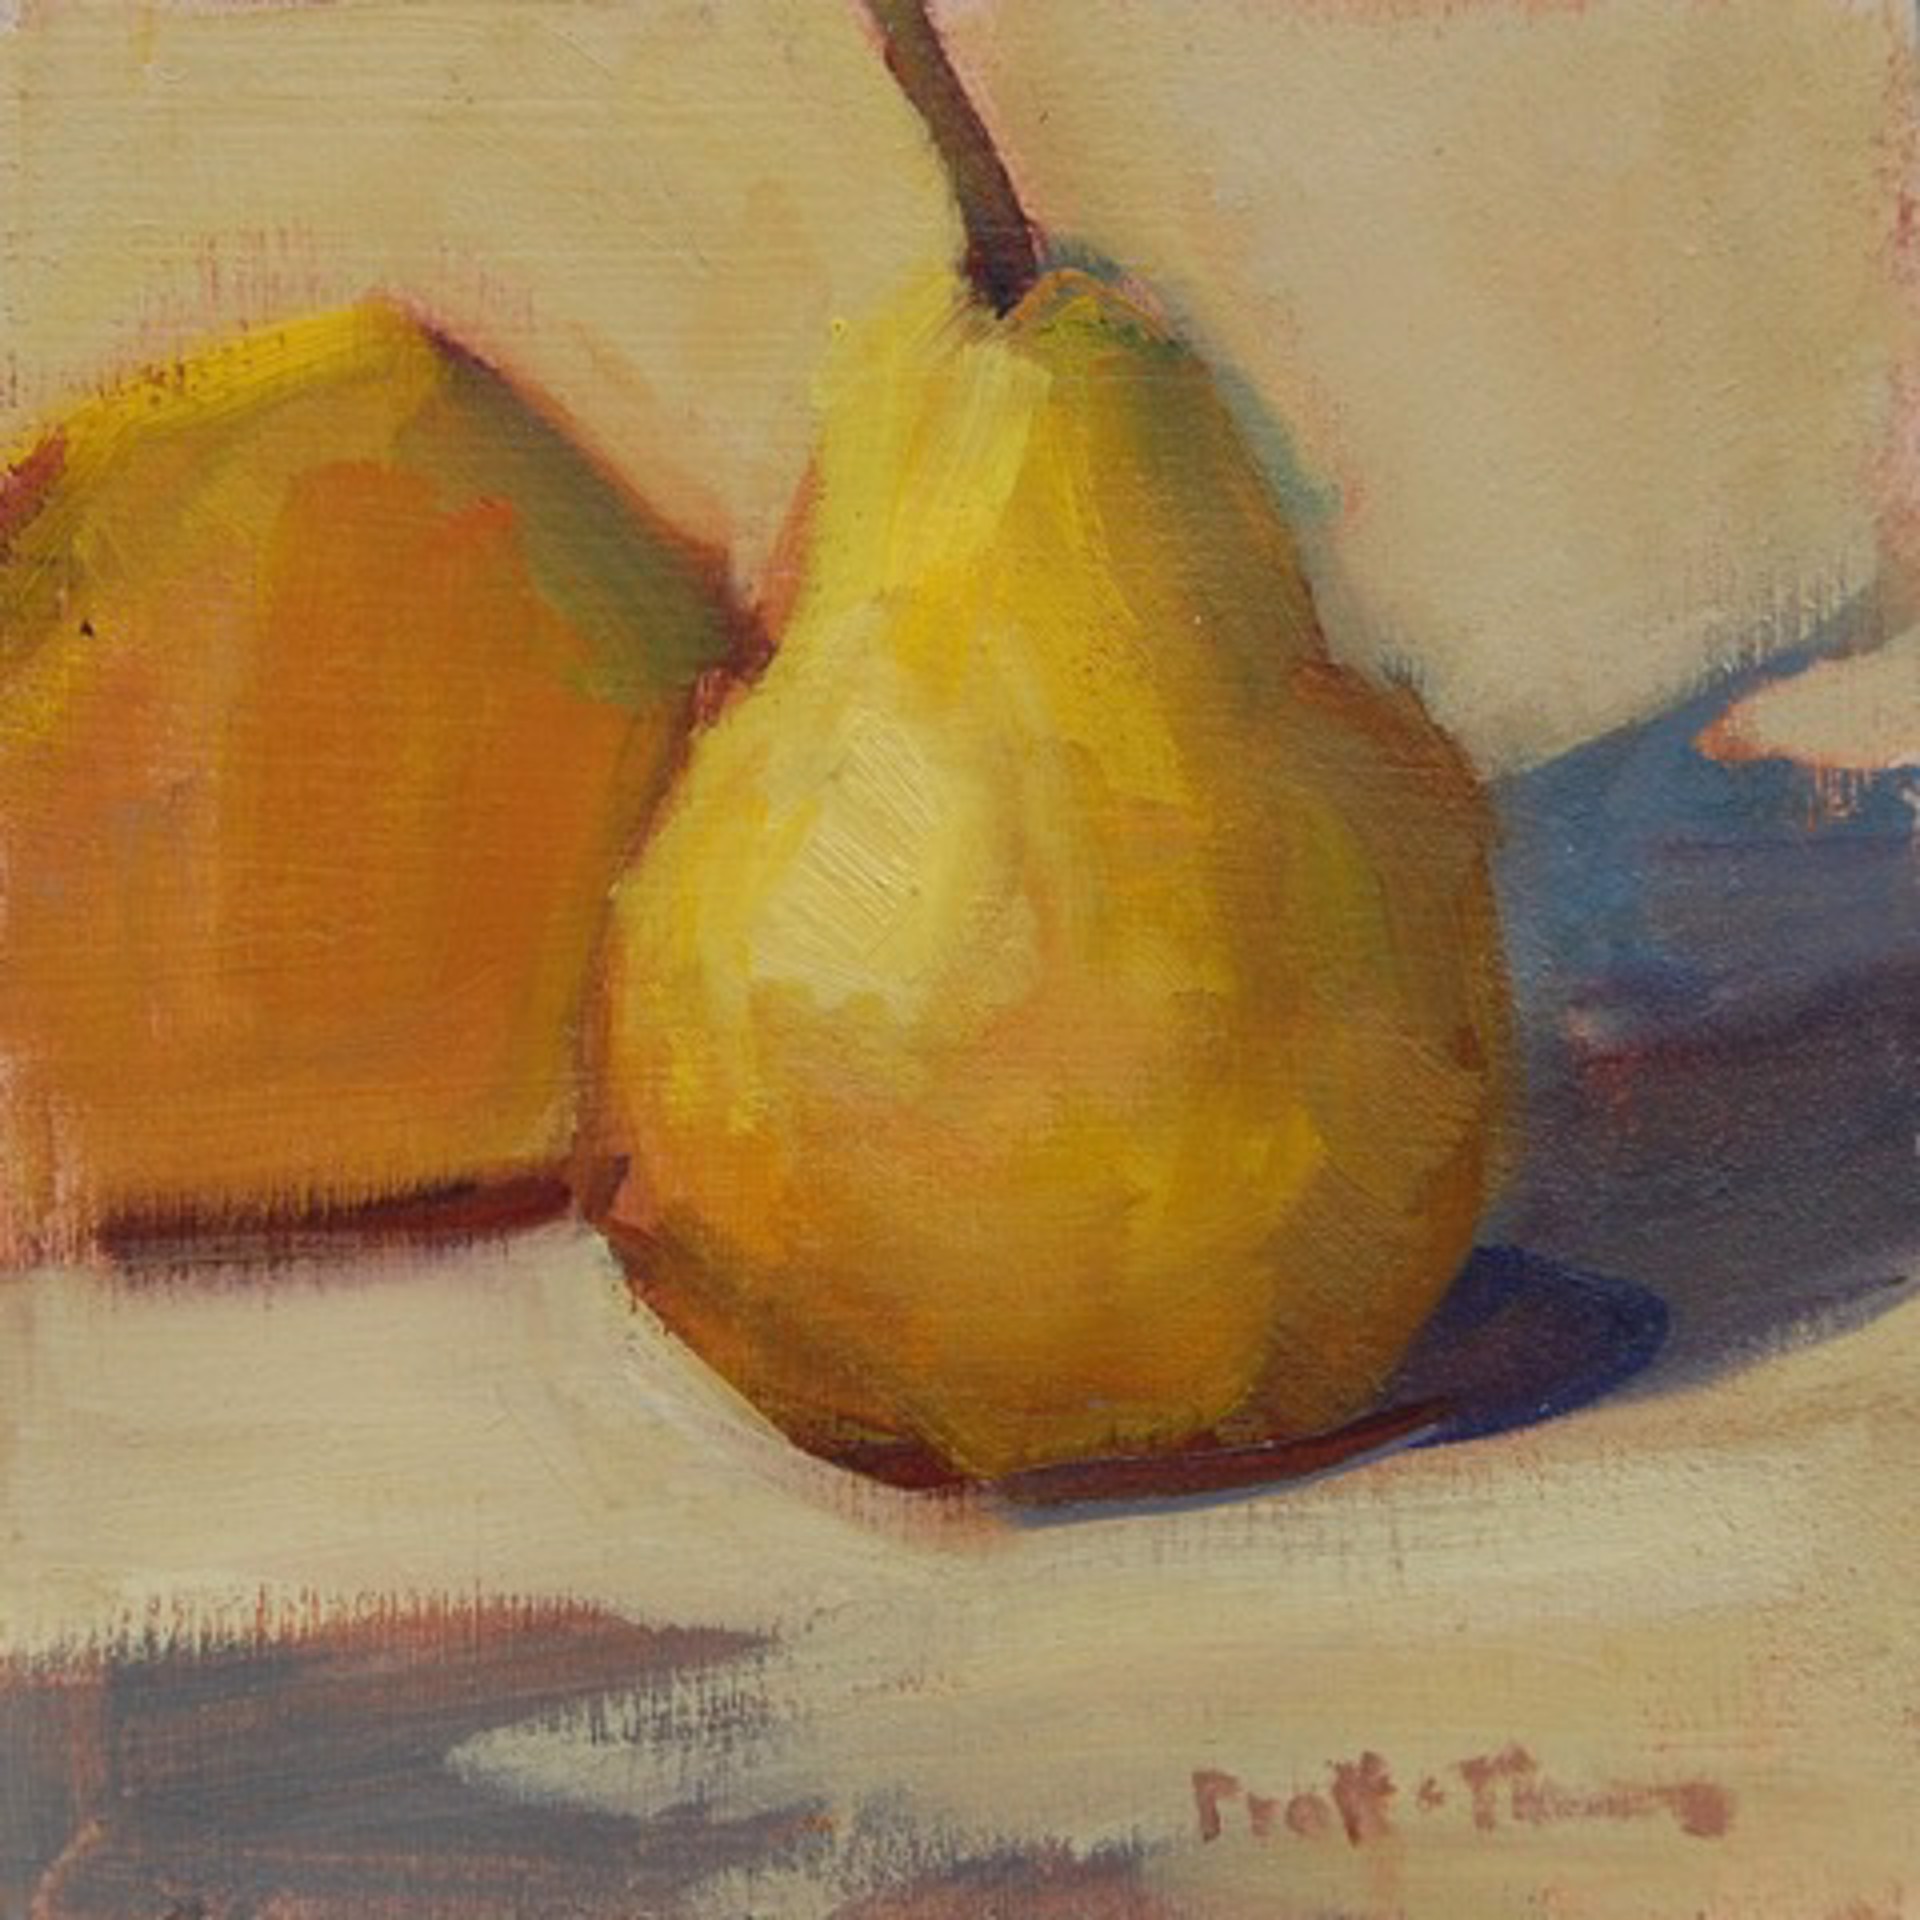 Heart Healthy Pears by Leslie Pratt-Thomas